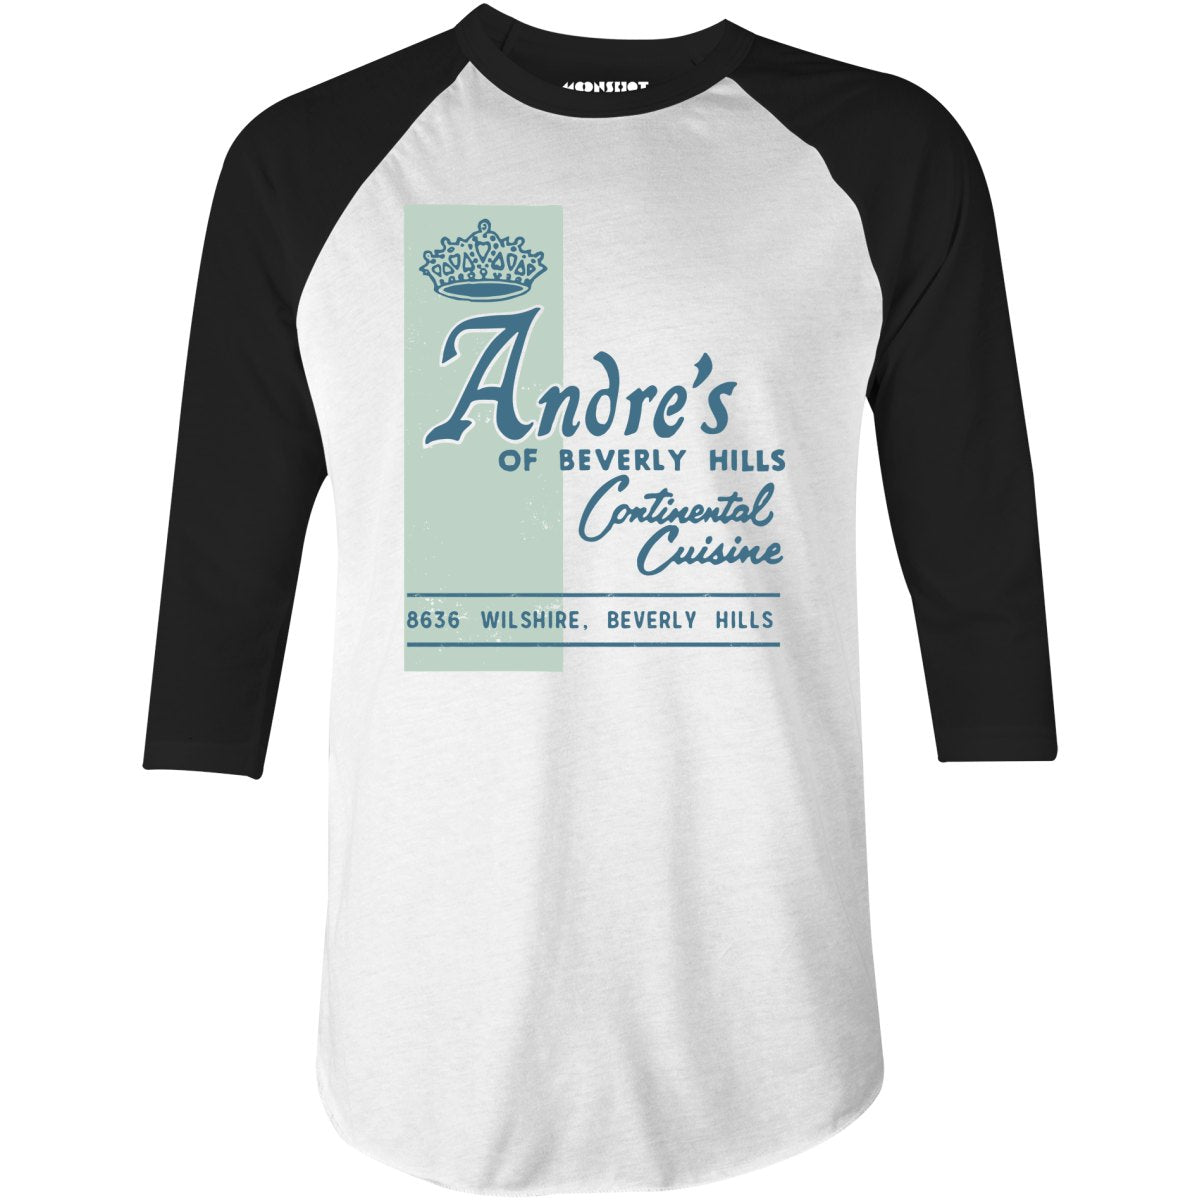 Andre's - Beverly Hills, CA - Vintage Restaurant - 3/4 Sleeve Raglan T-Shirt